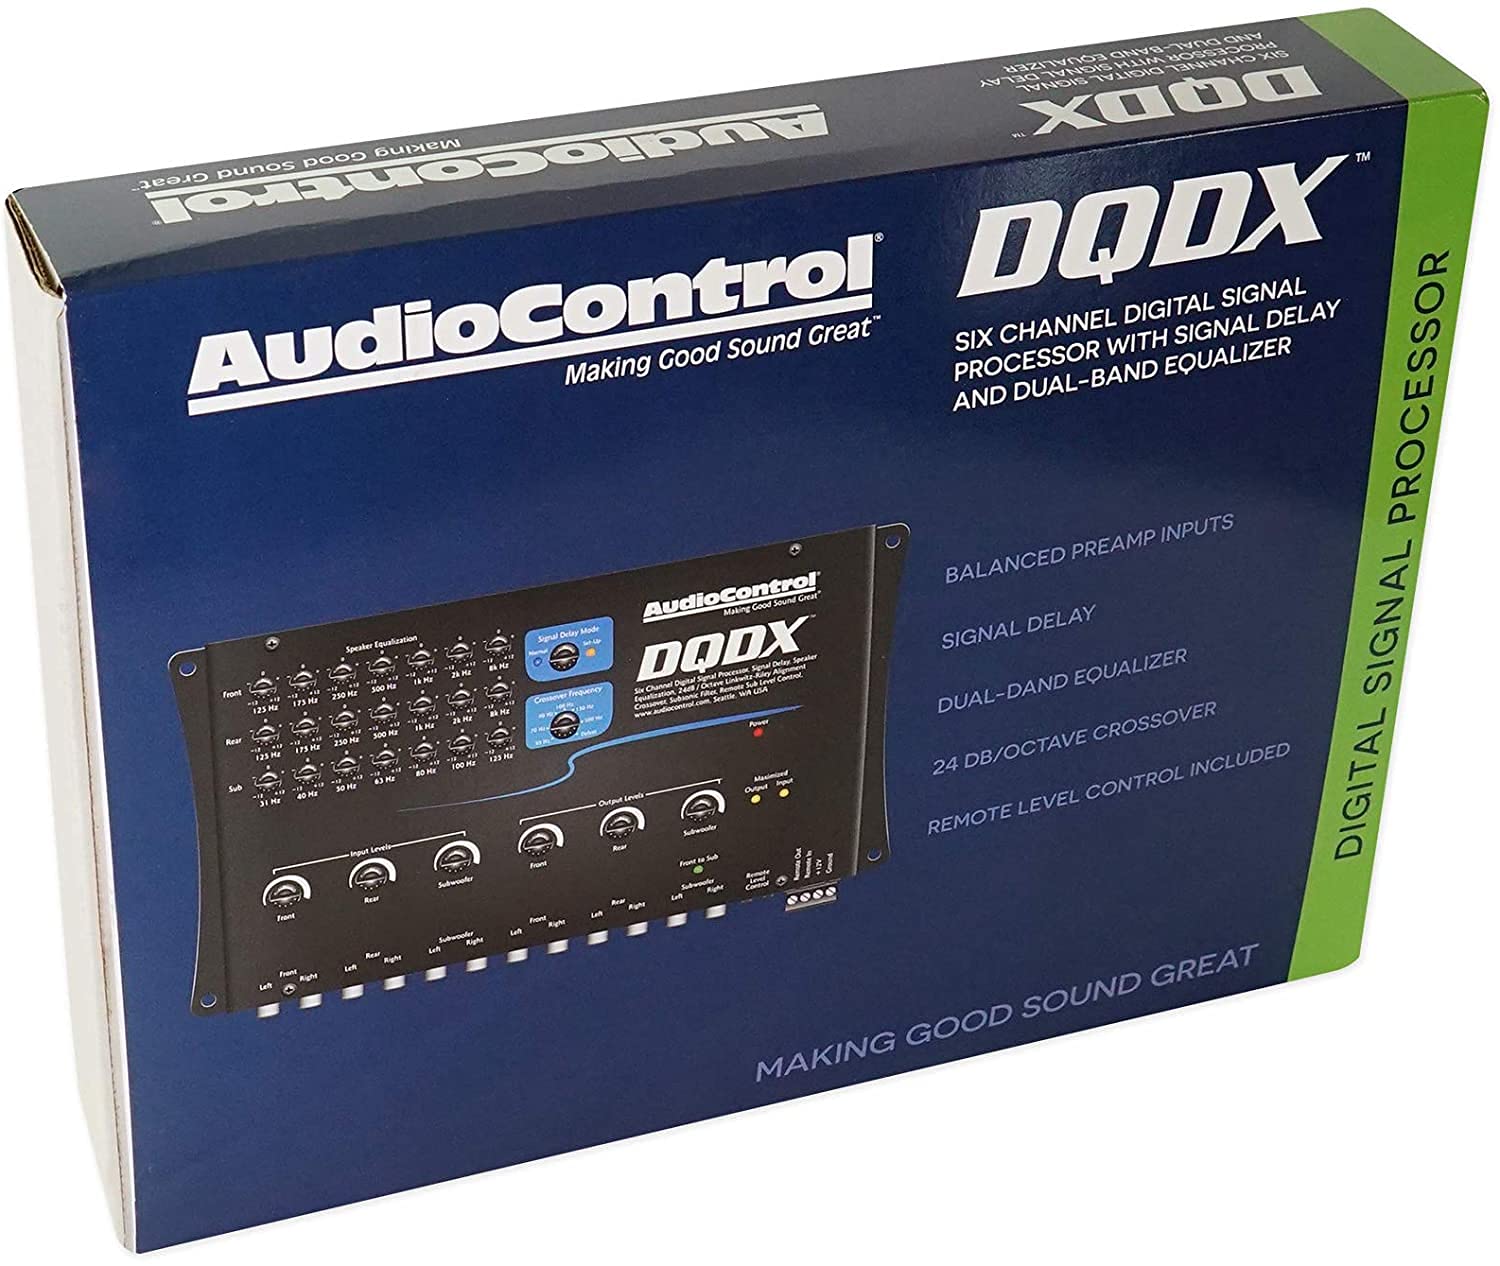 AudioControl DQDX Black 6 Channel Performance Digital Signal Processor